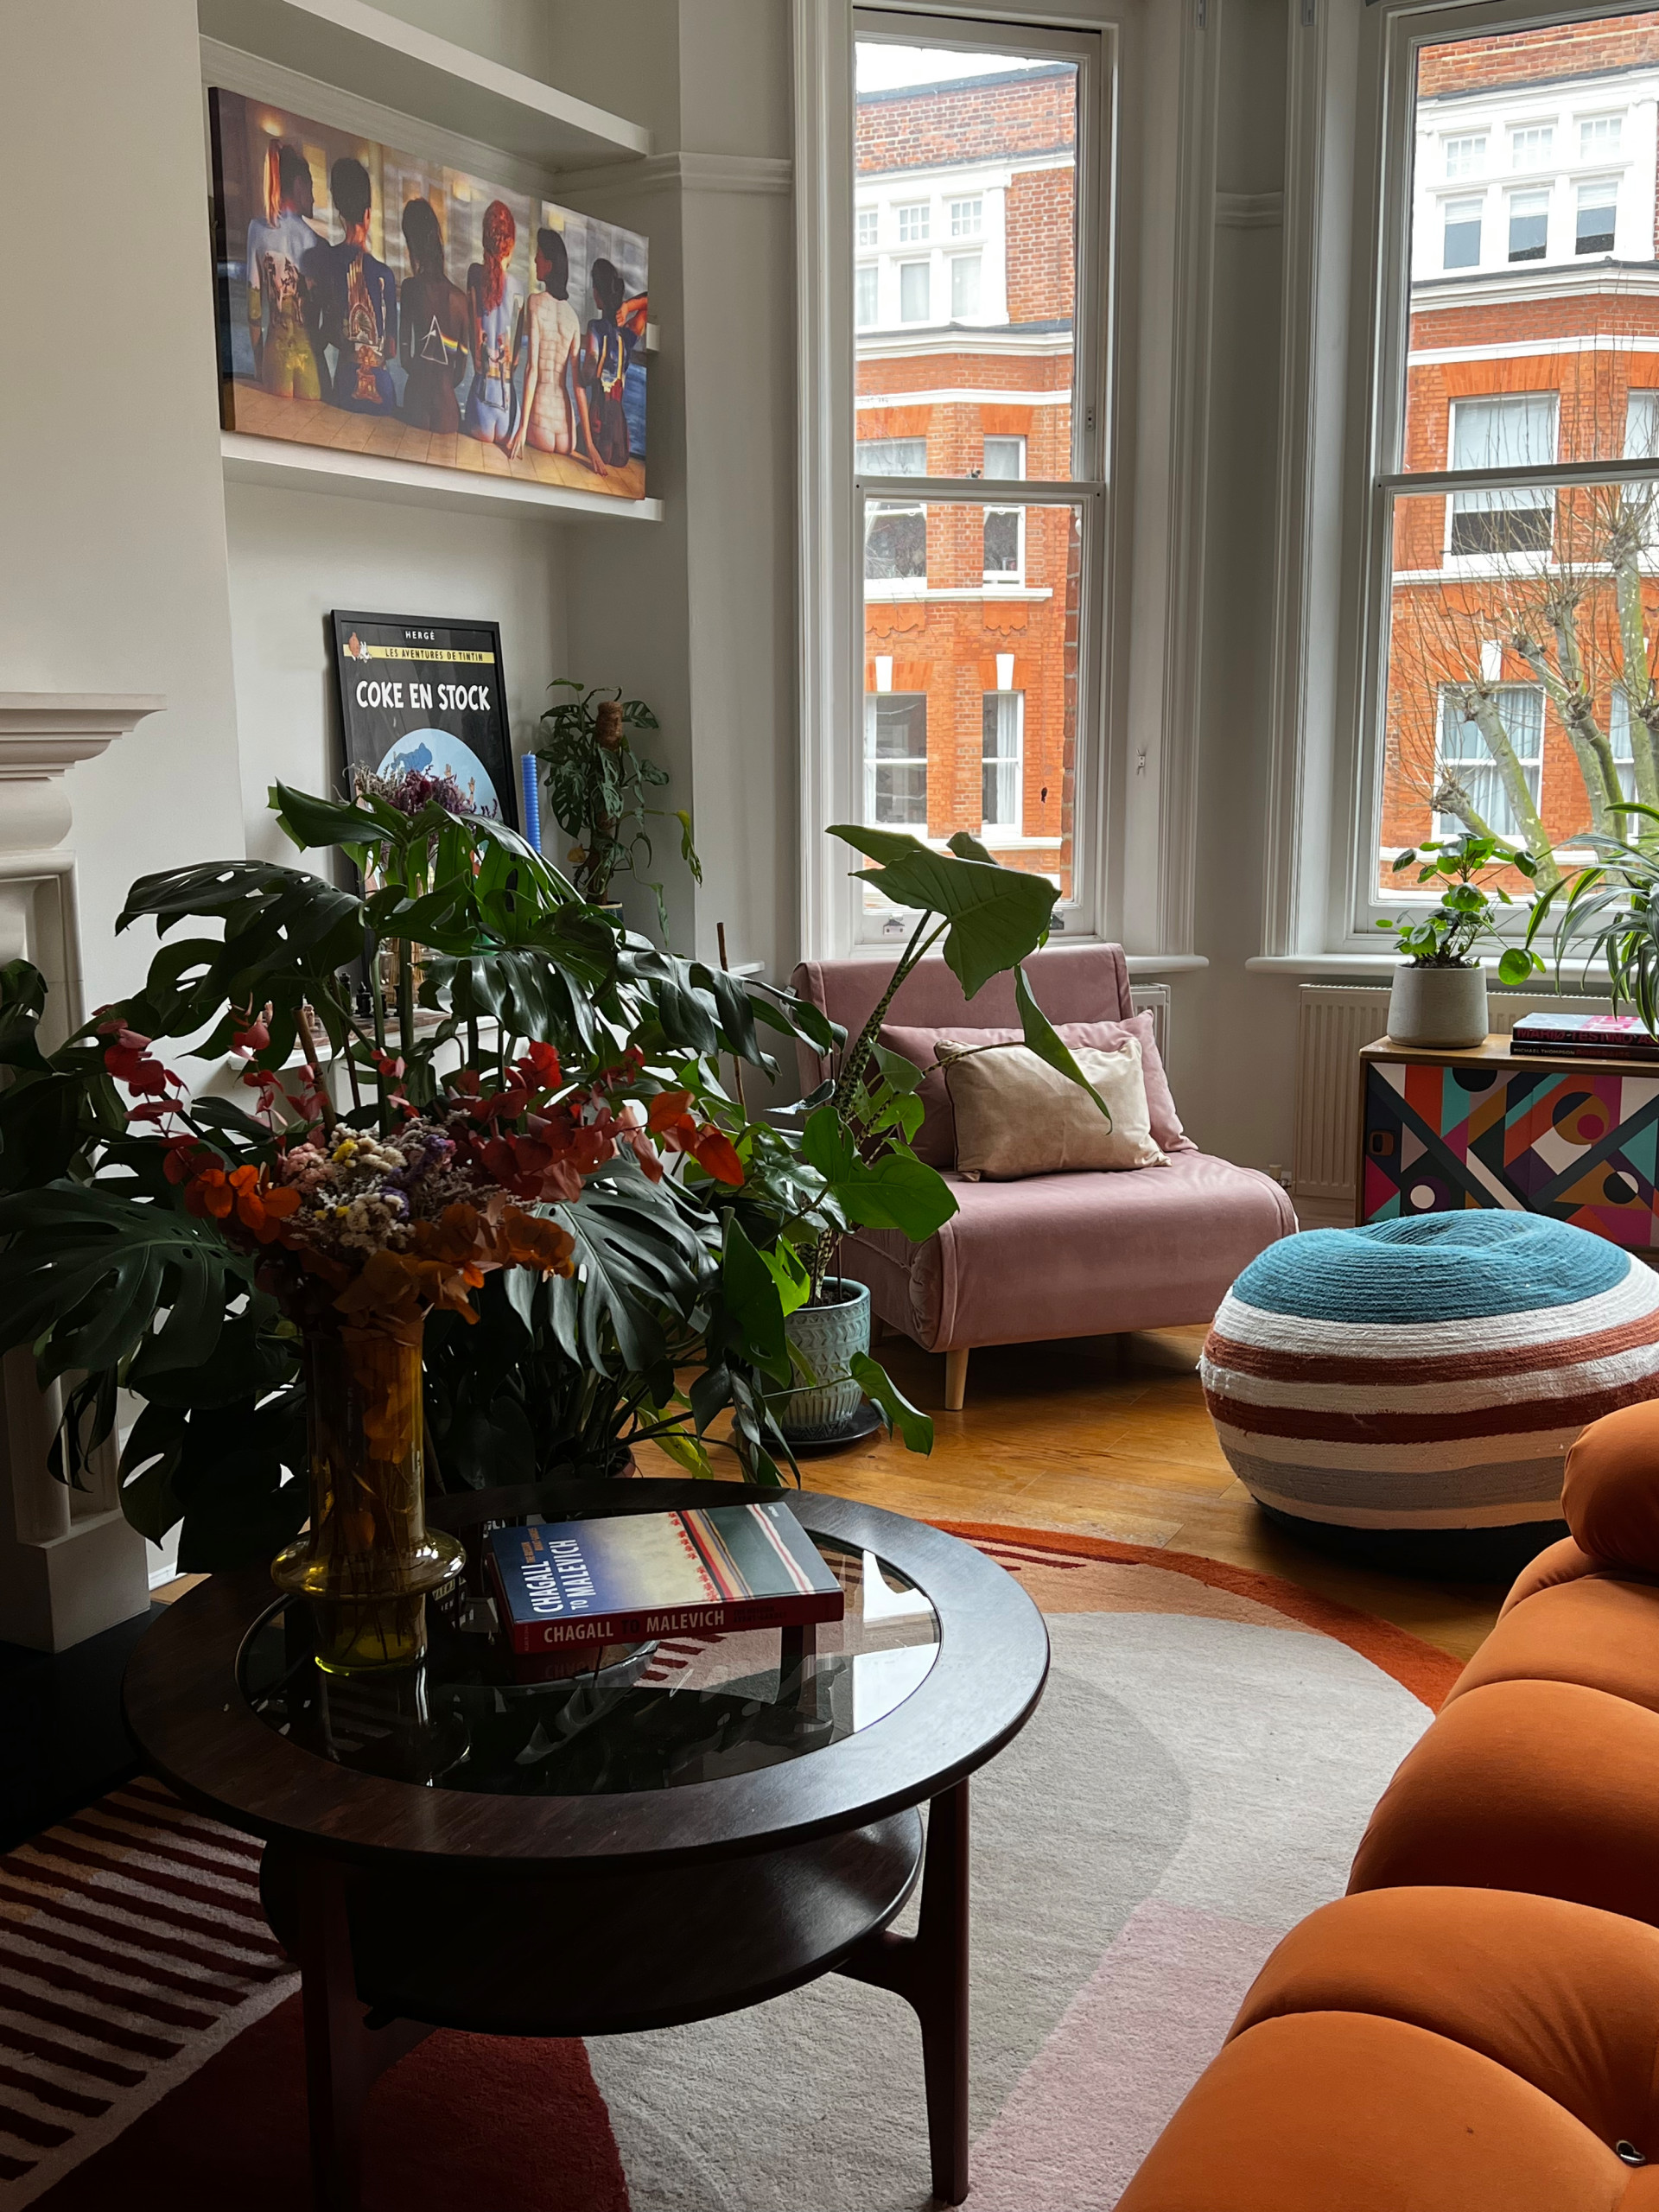 NW1 London - Living Room